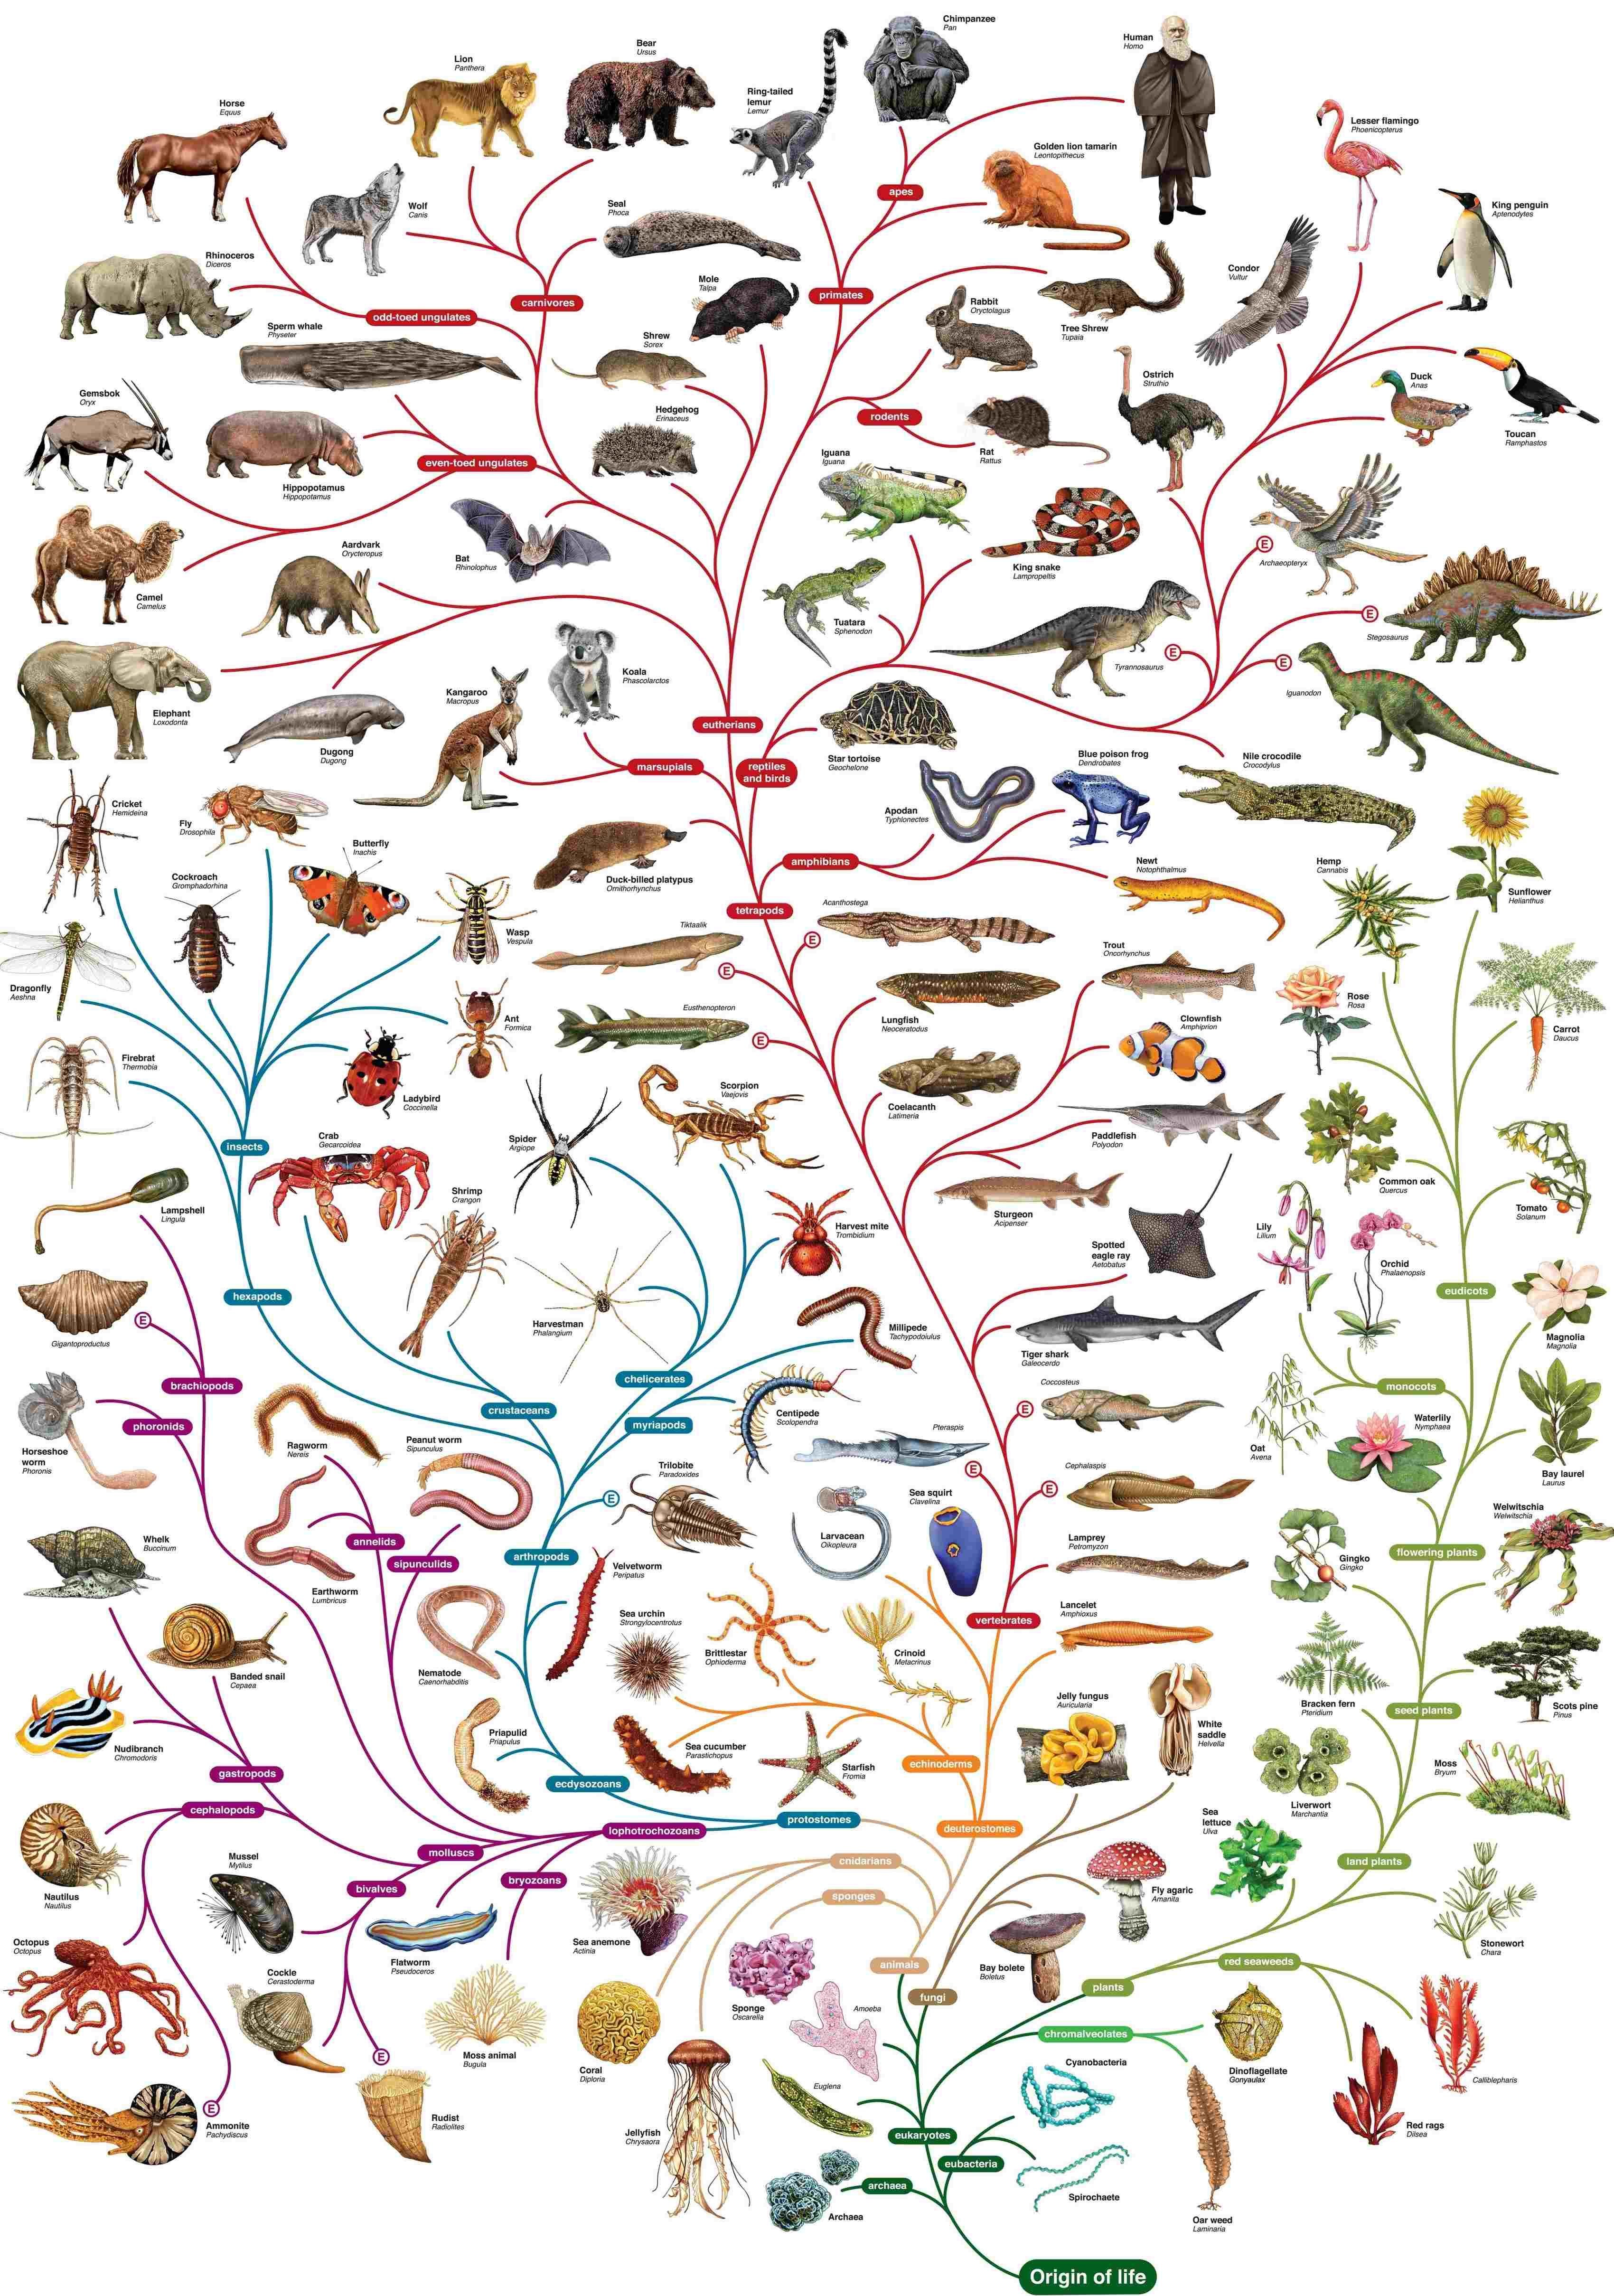 Название наука животных. Эволюционное дерево жизни Чарльза Дарвина. Биология Древо эволюции. Видовое дерево эволюционное Древо. Филогенетическое дерево эволюции.